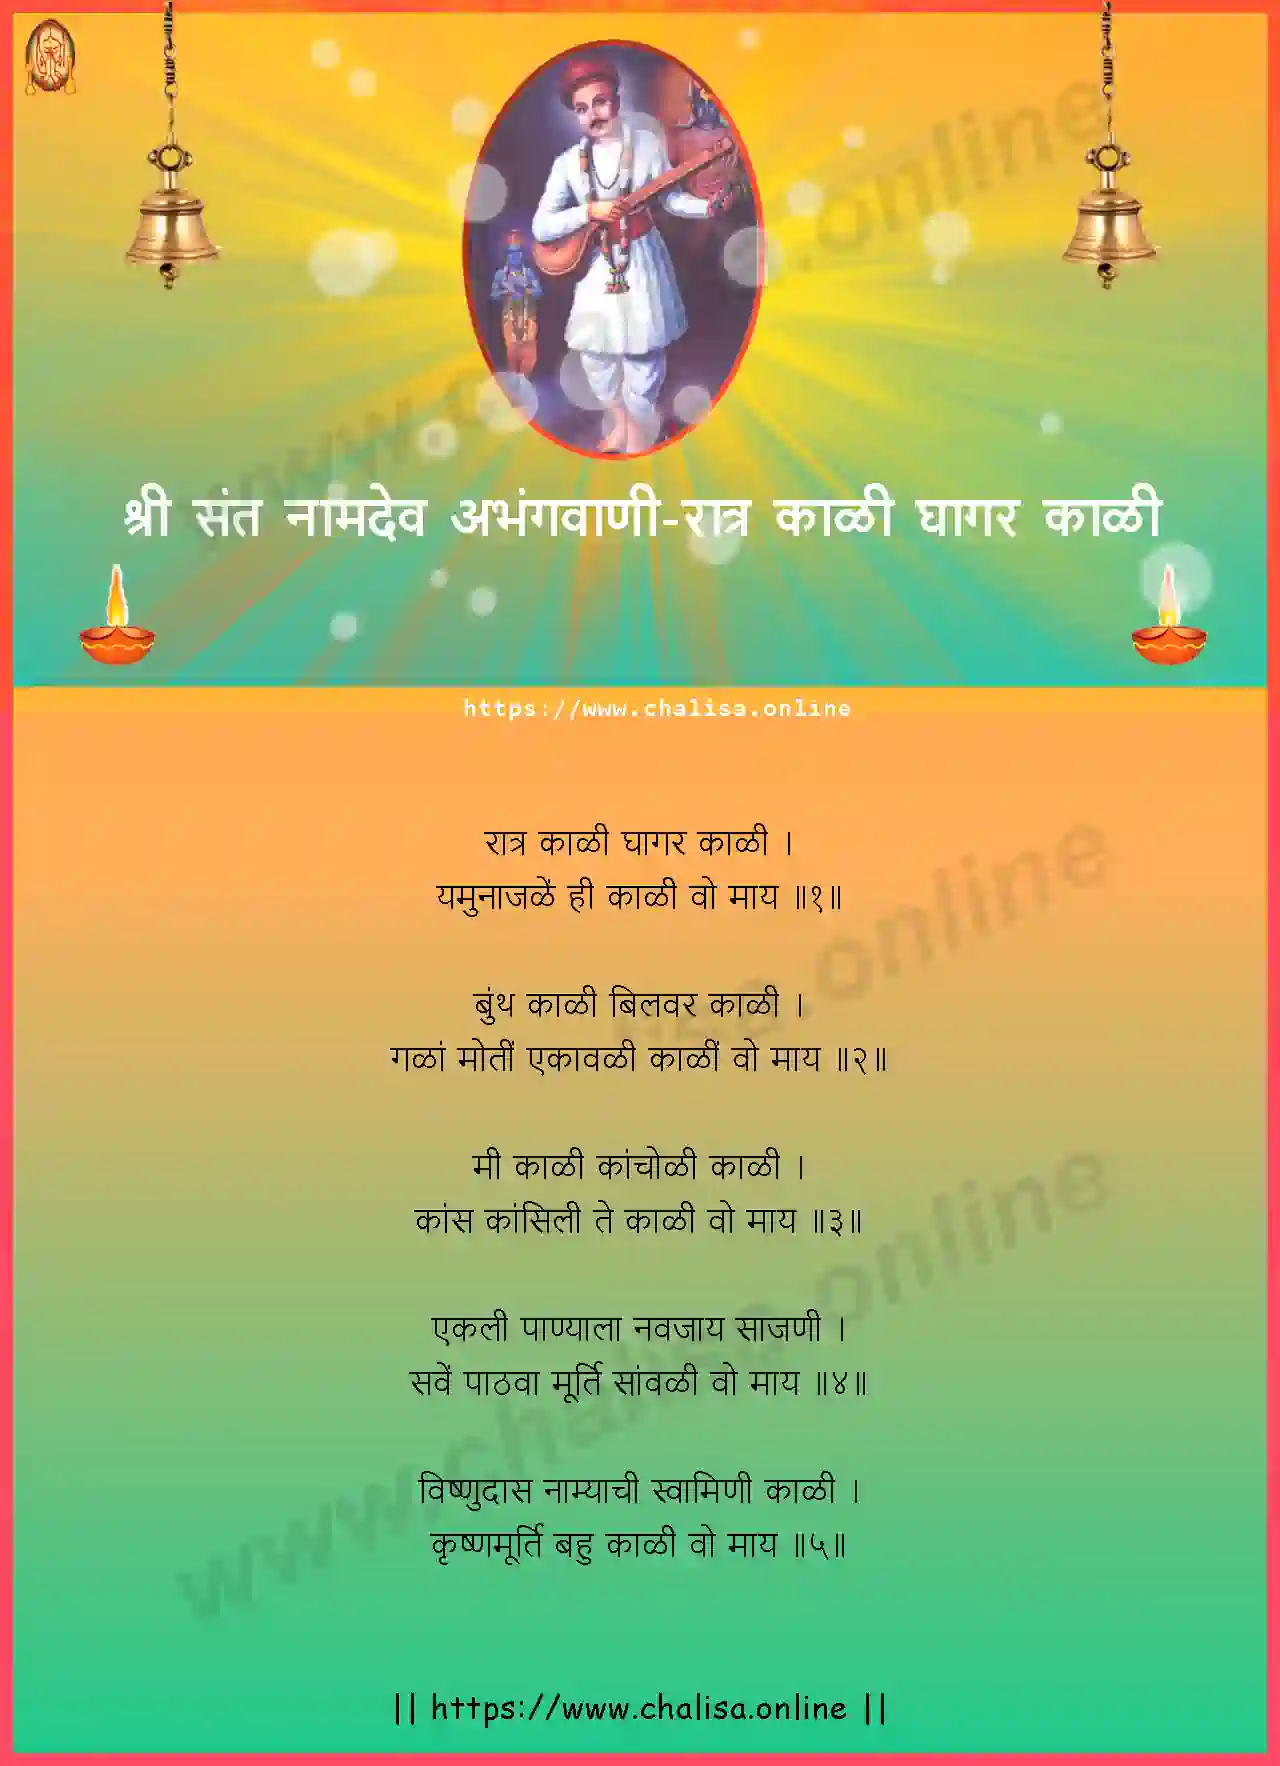 ratra-kali-ghagar-kali-shri-sant-namadev-abhang-marathi-lyrics-download